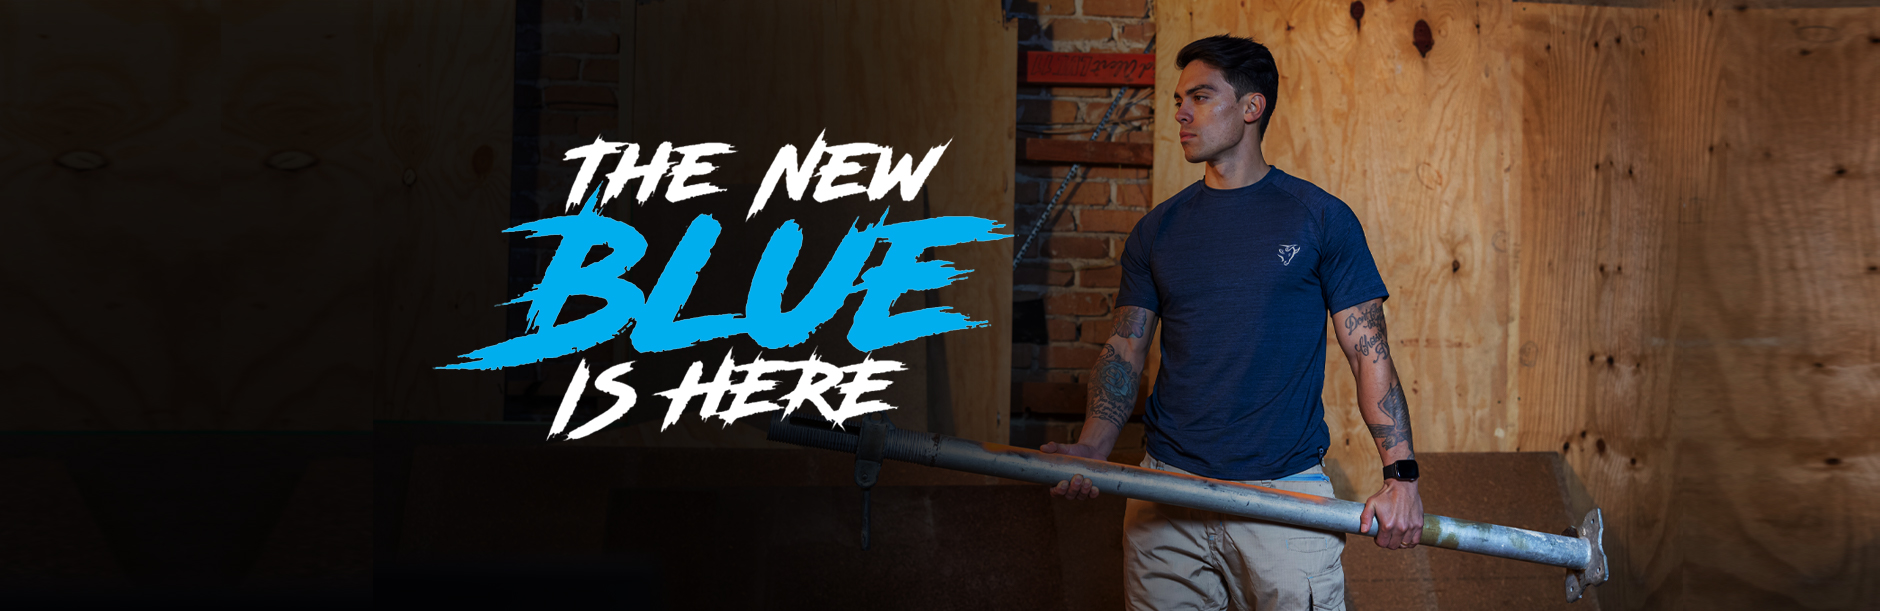 AU_NZ_The New Blue